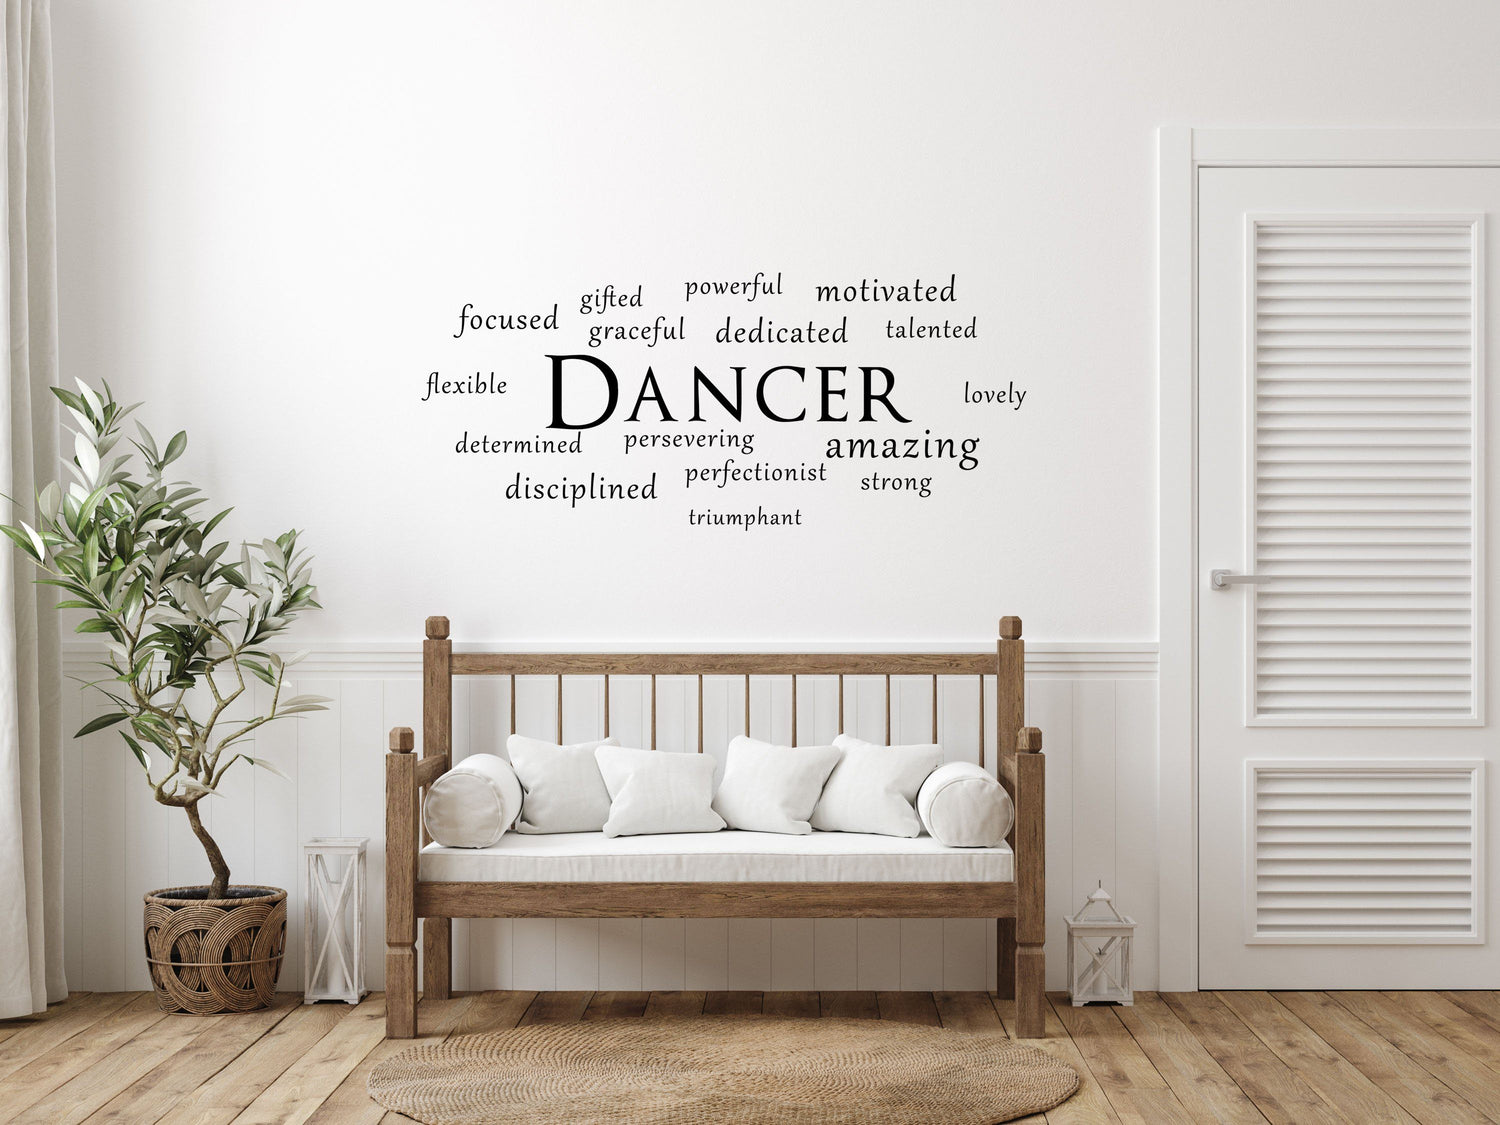 Dancer Word Cloud - Gym Wall Decor Sticker - Inspirational Wall Decals Vinyl Wall Decal Done 